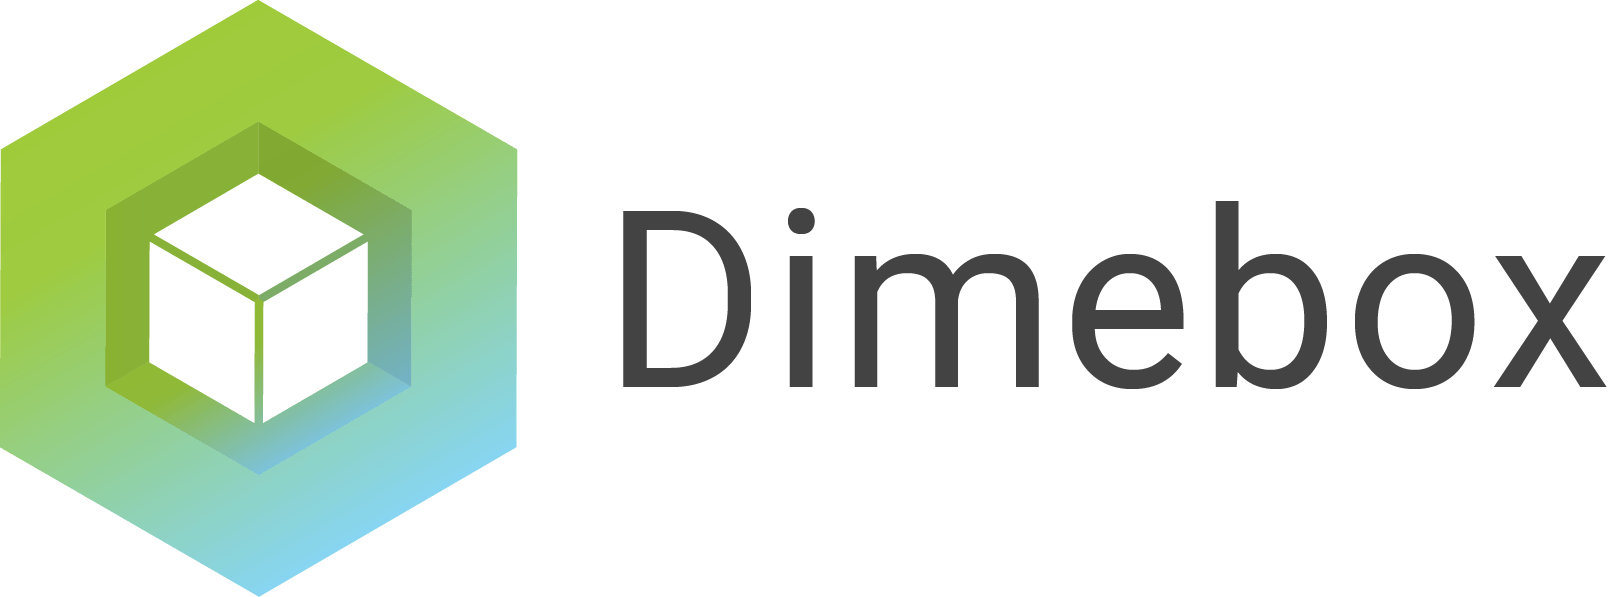 http://www.finsmes.com/2017/03/payment-technology-startup-dimebox-raises-e5m-in-funding.html